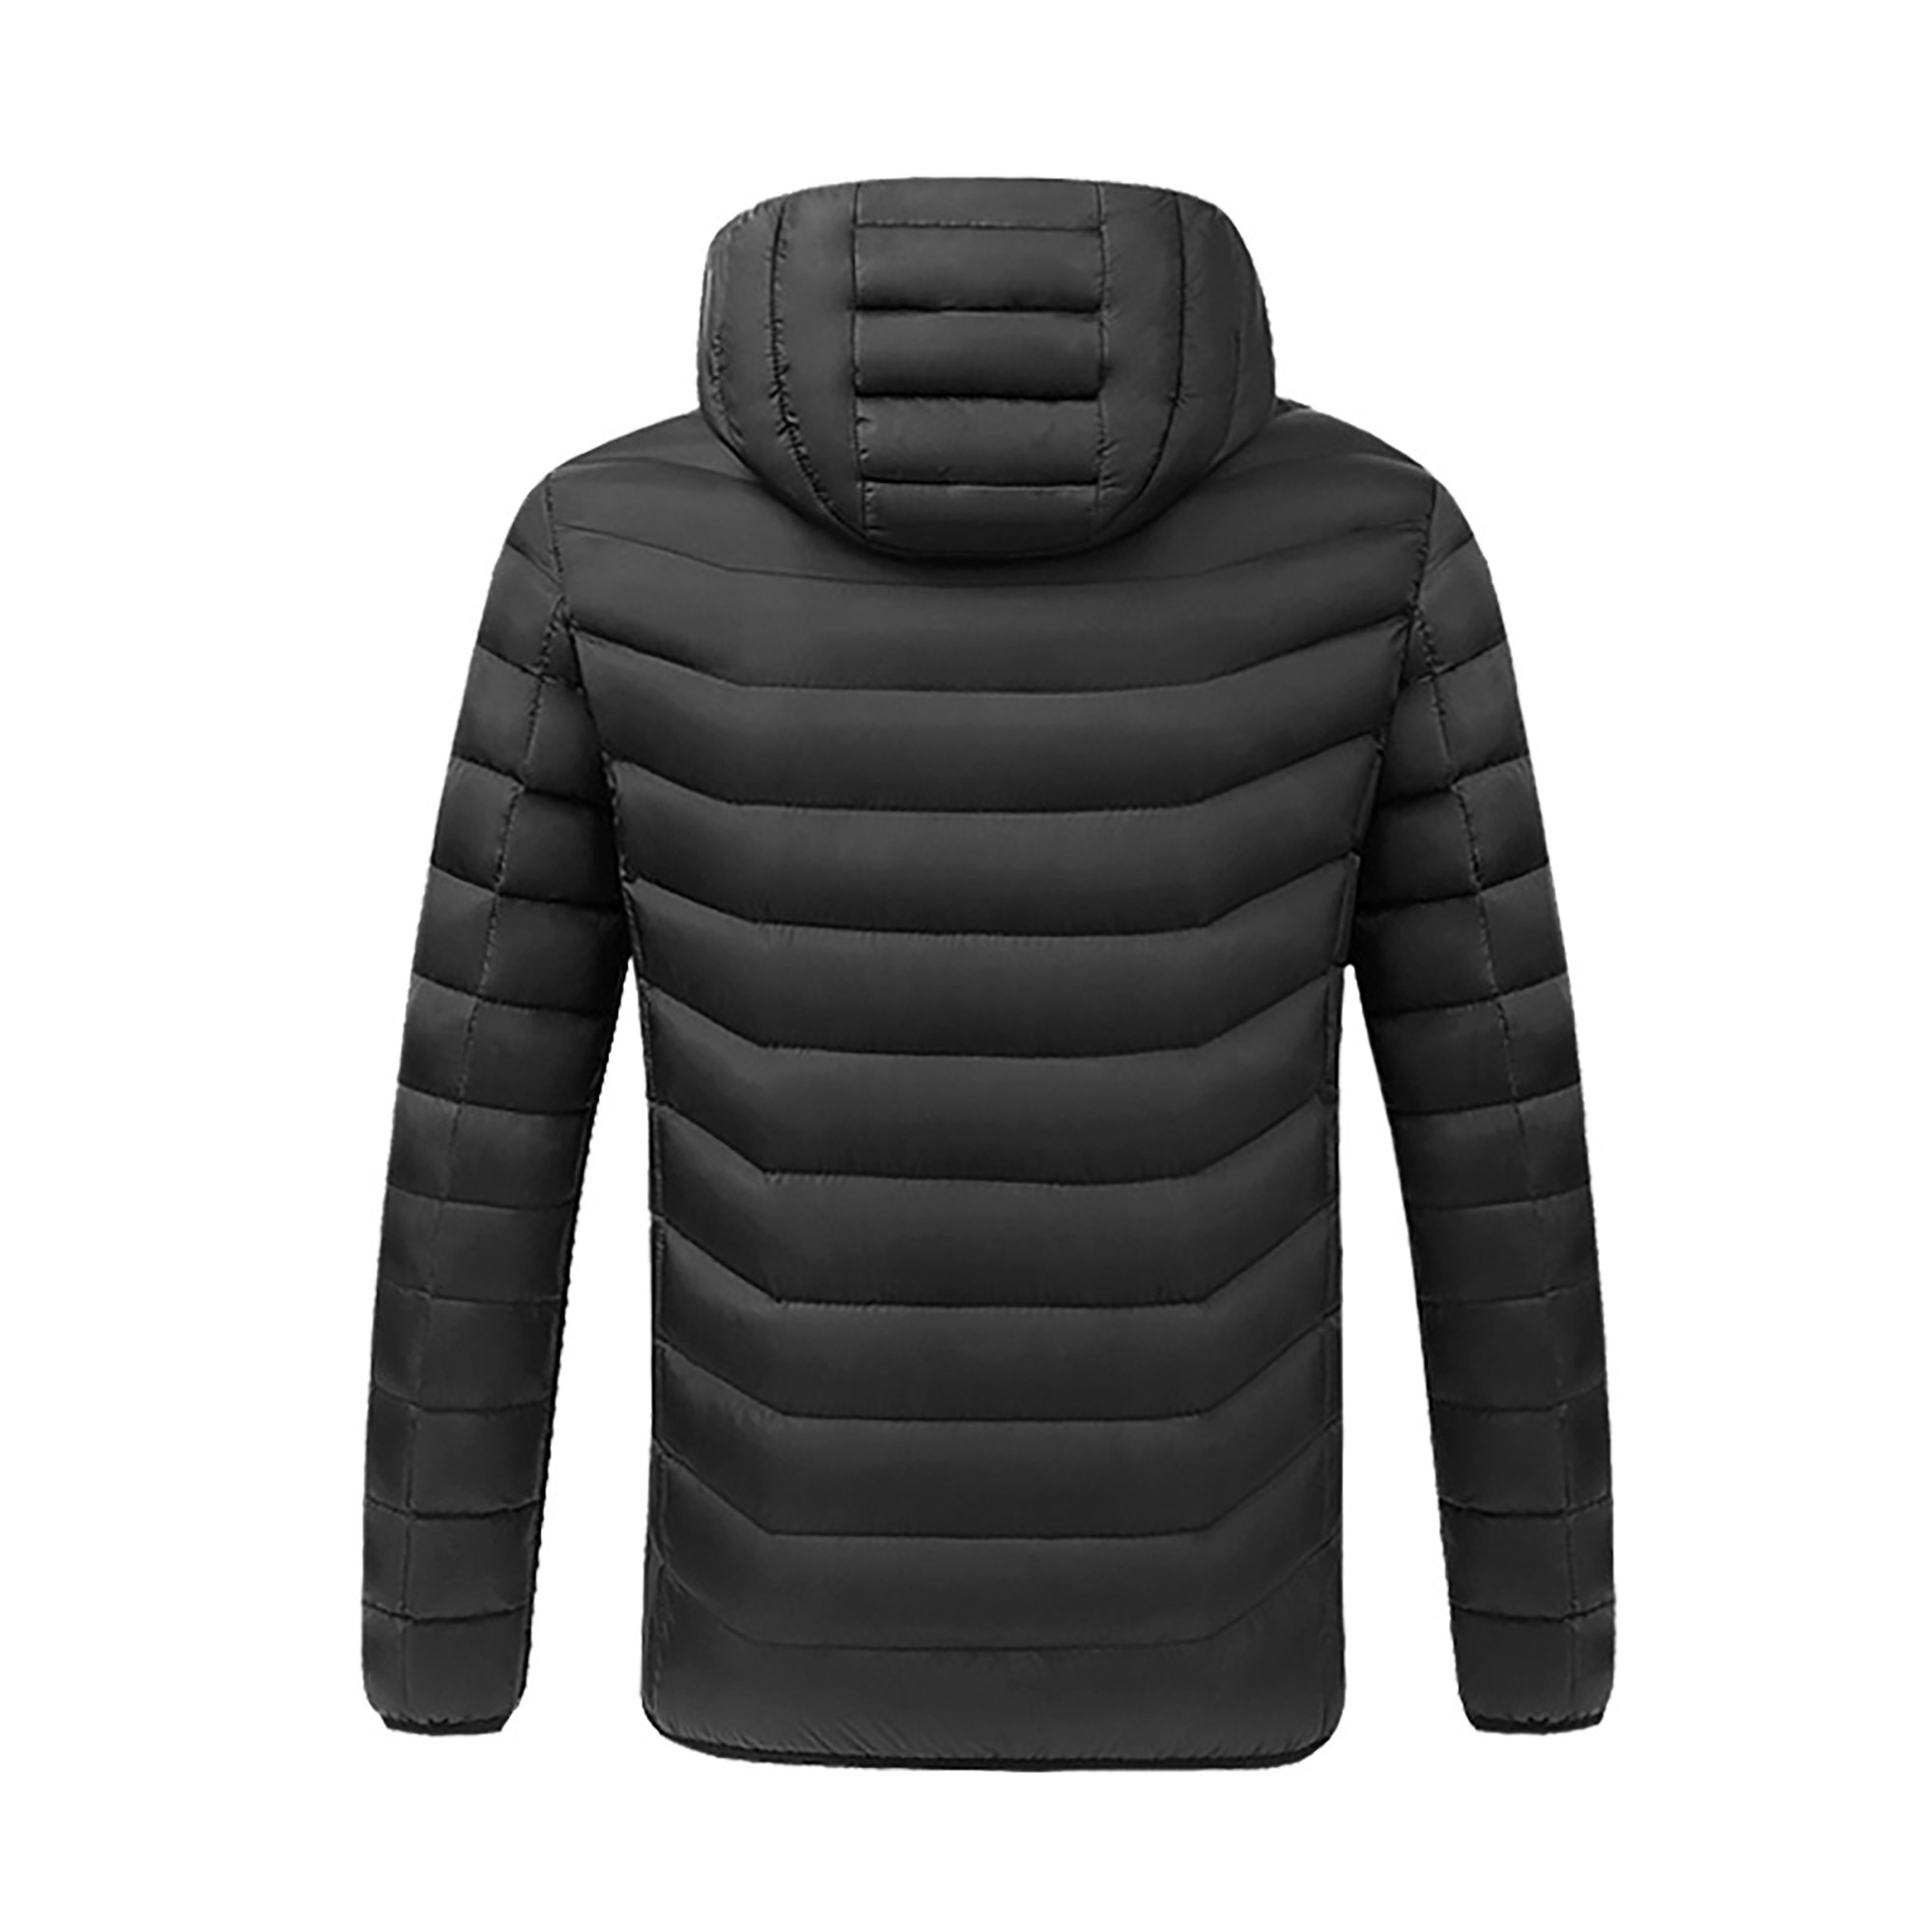 CVLIFE Men's Heated Jacket Full Zip with Detachable Hood (Power Bank is Not Included) Winter Body Warmer Unisex Women Lightweight Heating Coat Clothing - image 4 of 4